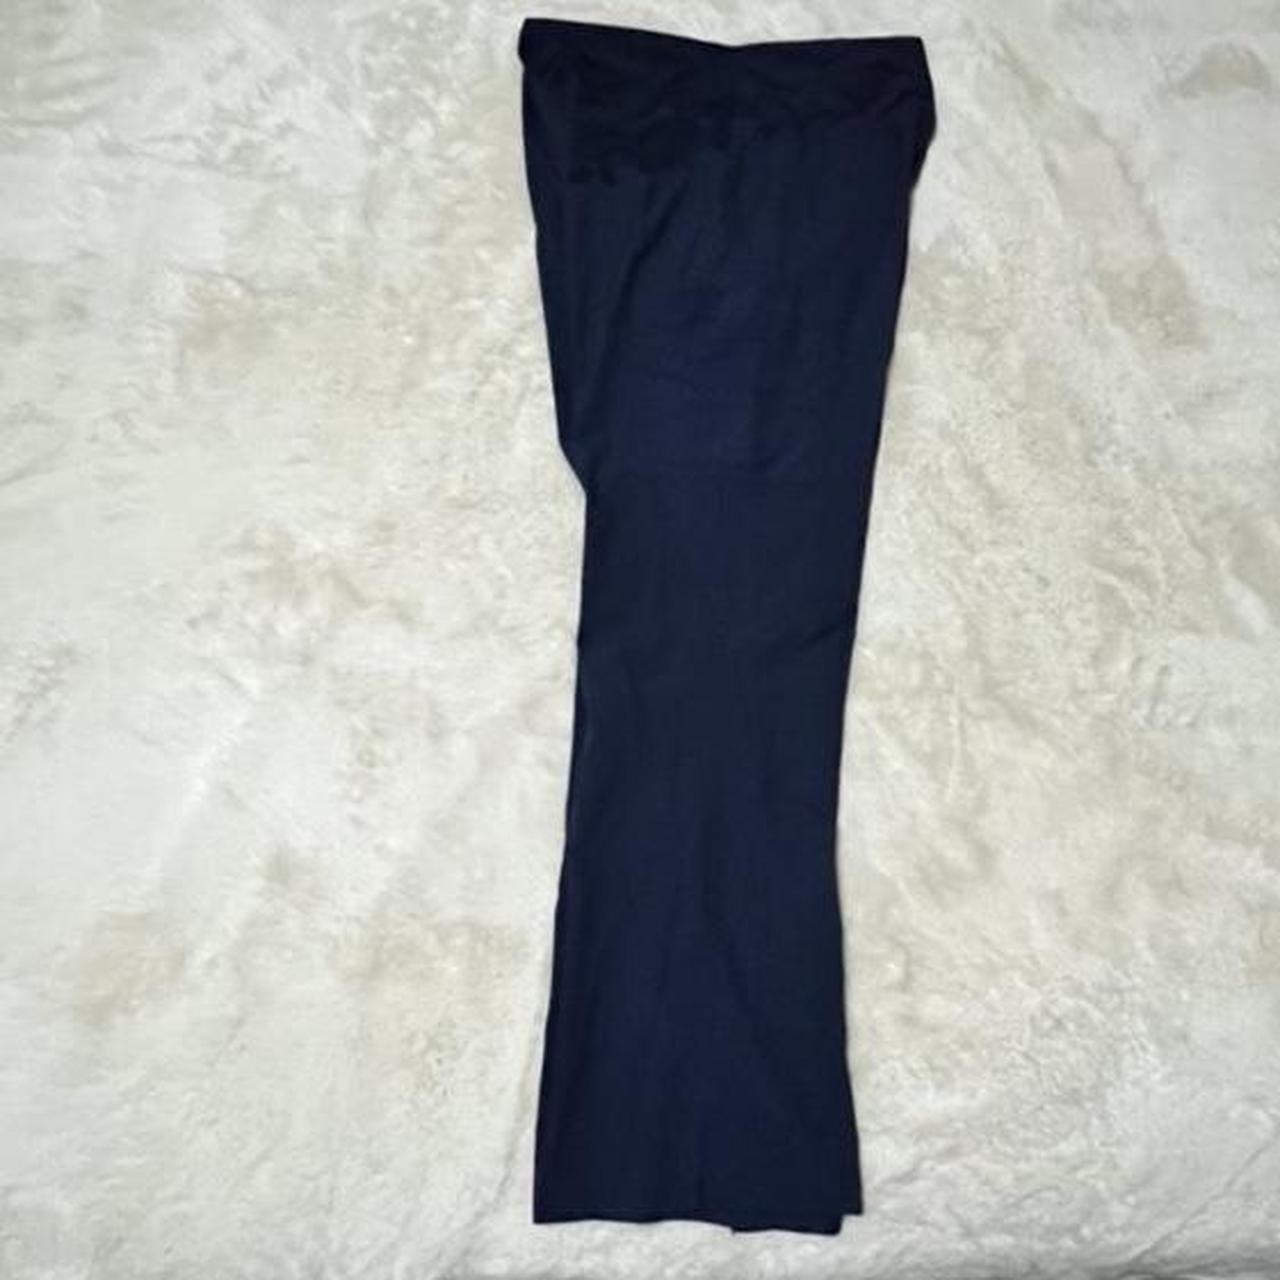 Product Image 3 - Maternity scrubs Pants
Side pocket